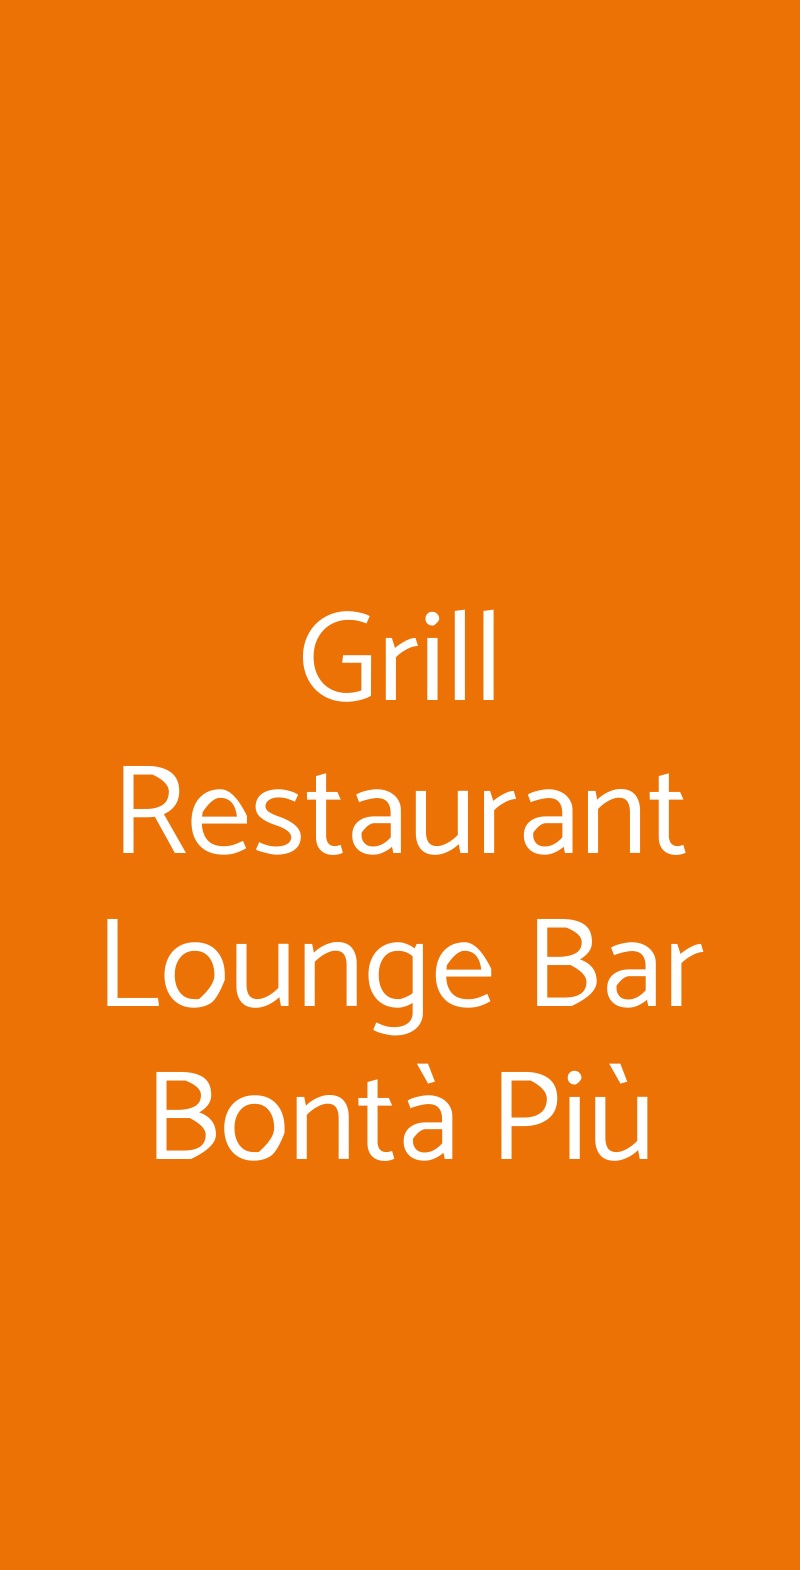 Grill Restaurant Lounge Bar Bontà Più Milano menù 1 pagina